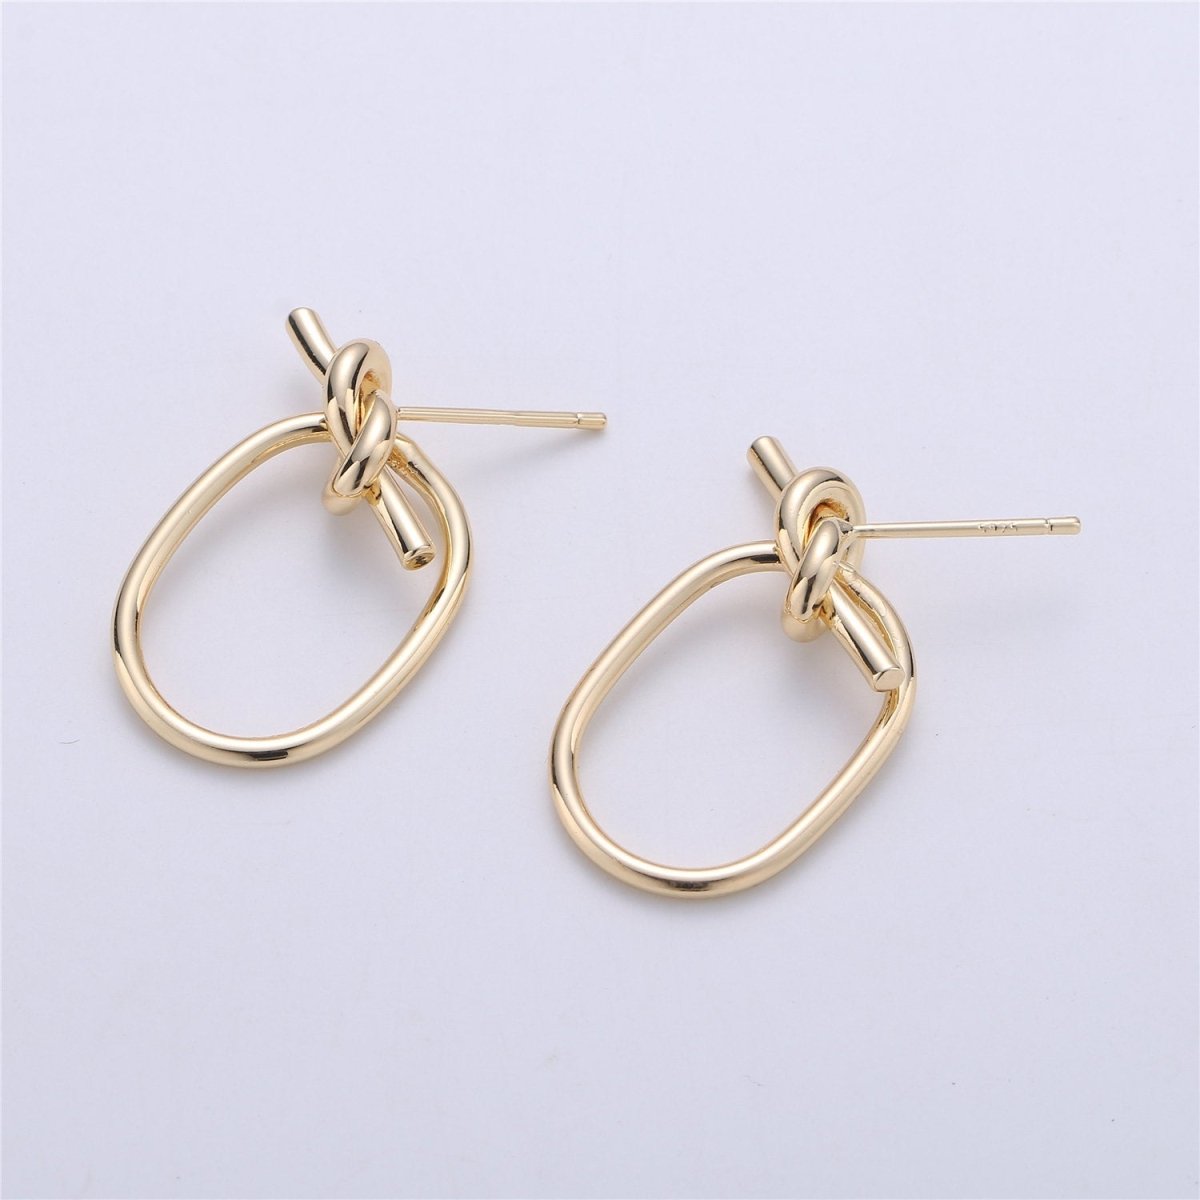 15x30mm 1 Pair of 14K Gold Filled Twist Hoop Tiny Hoop Earrings for Jewelry Making Supply Findings K-178 - DLUXCA